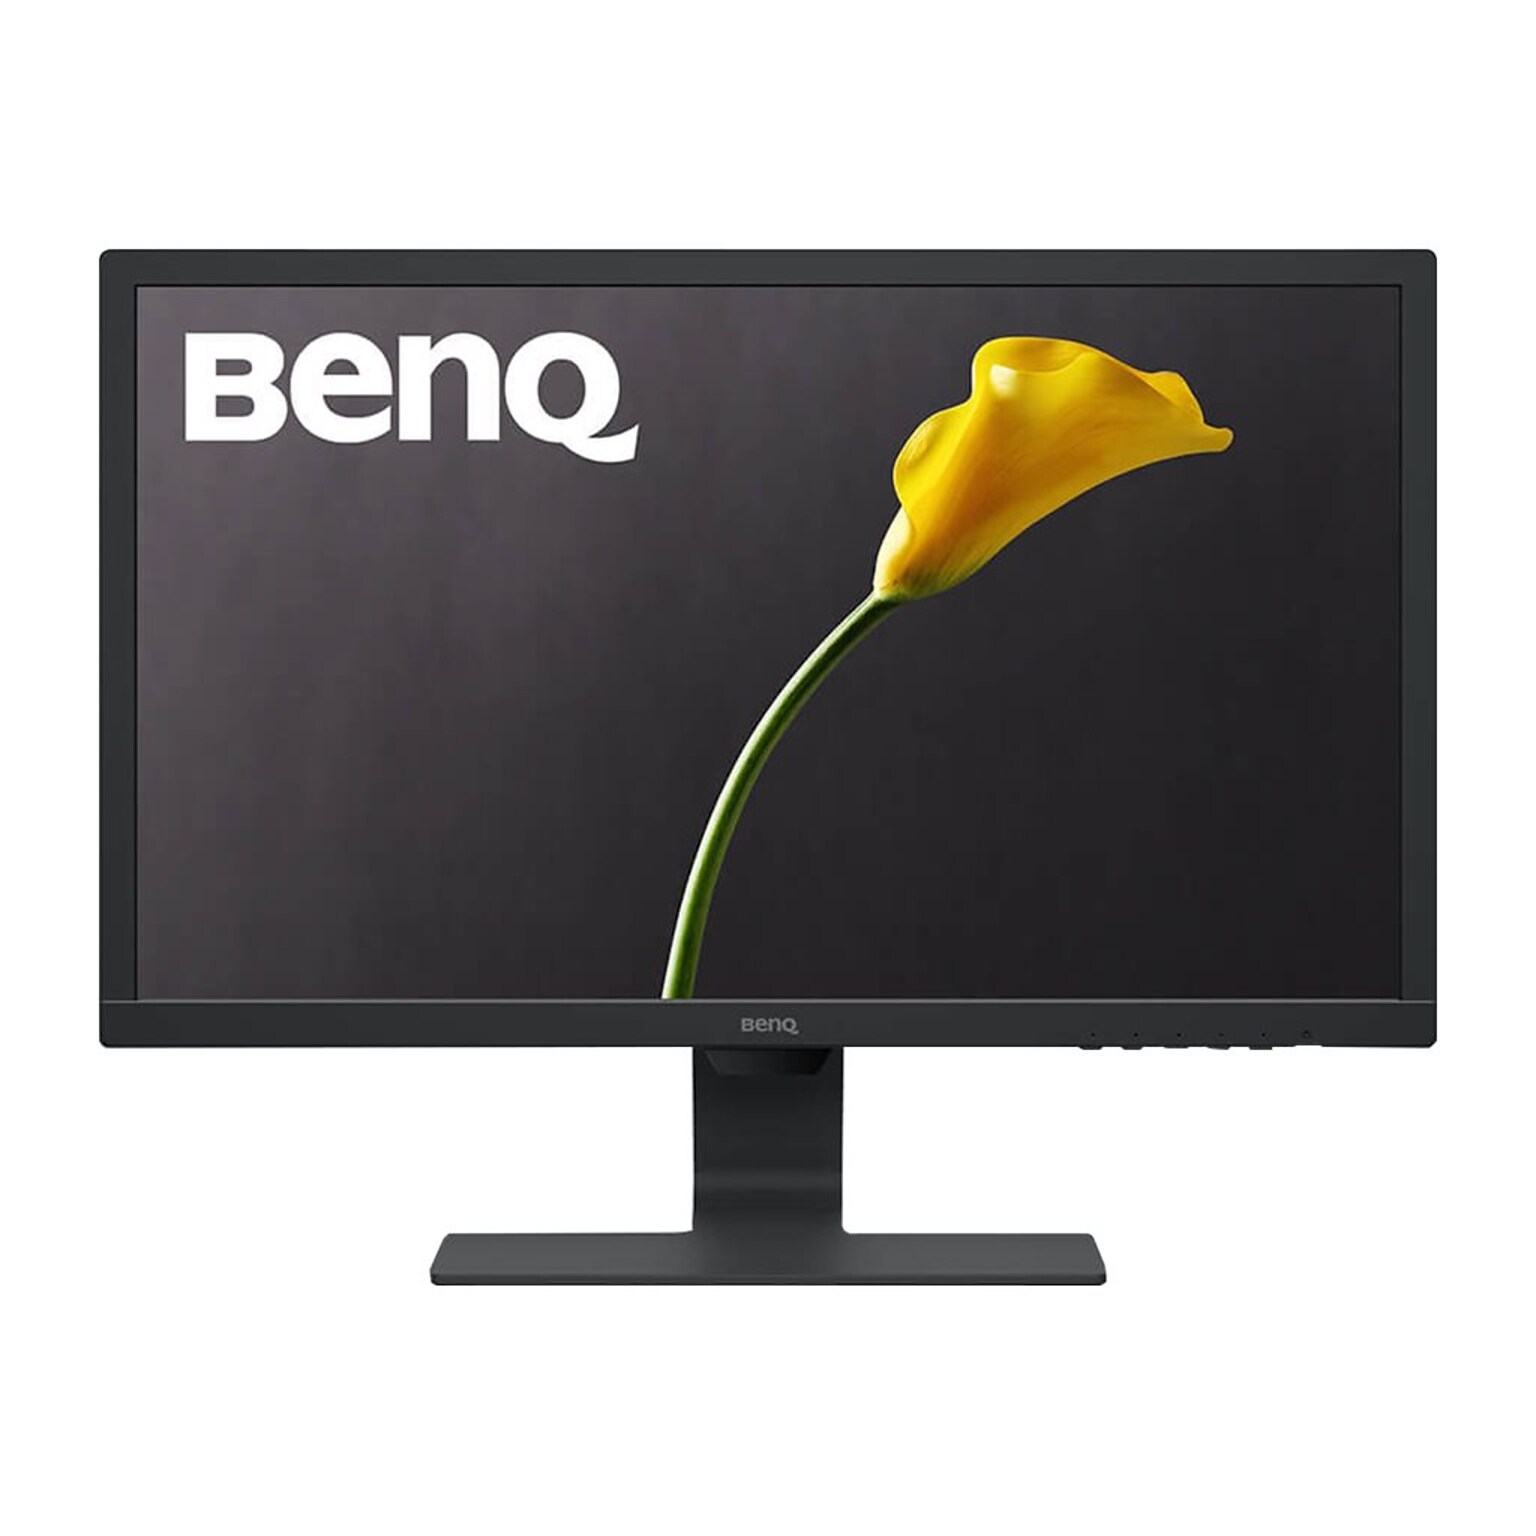 BenQ 24 LED Monitor, Black (GL2480)